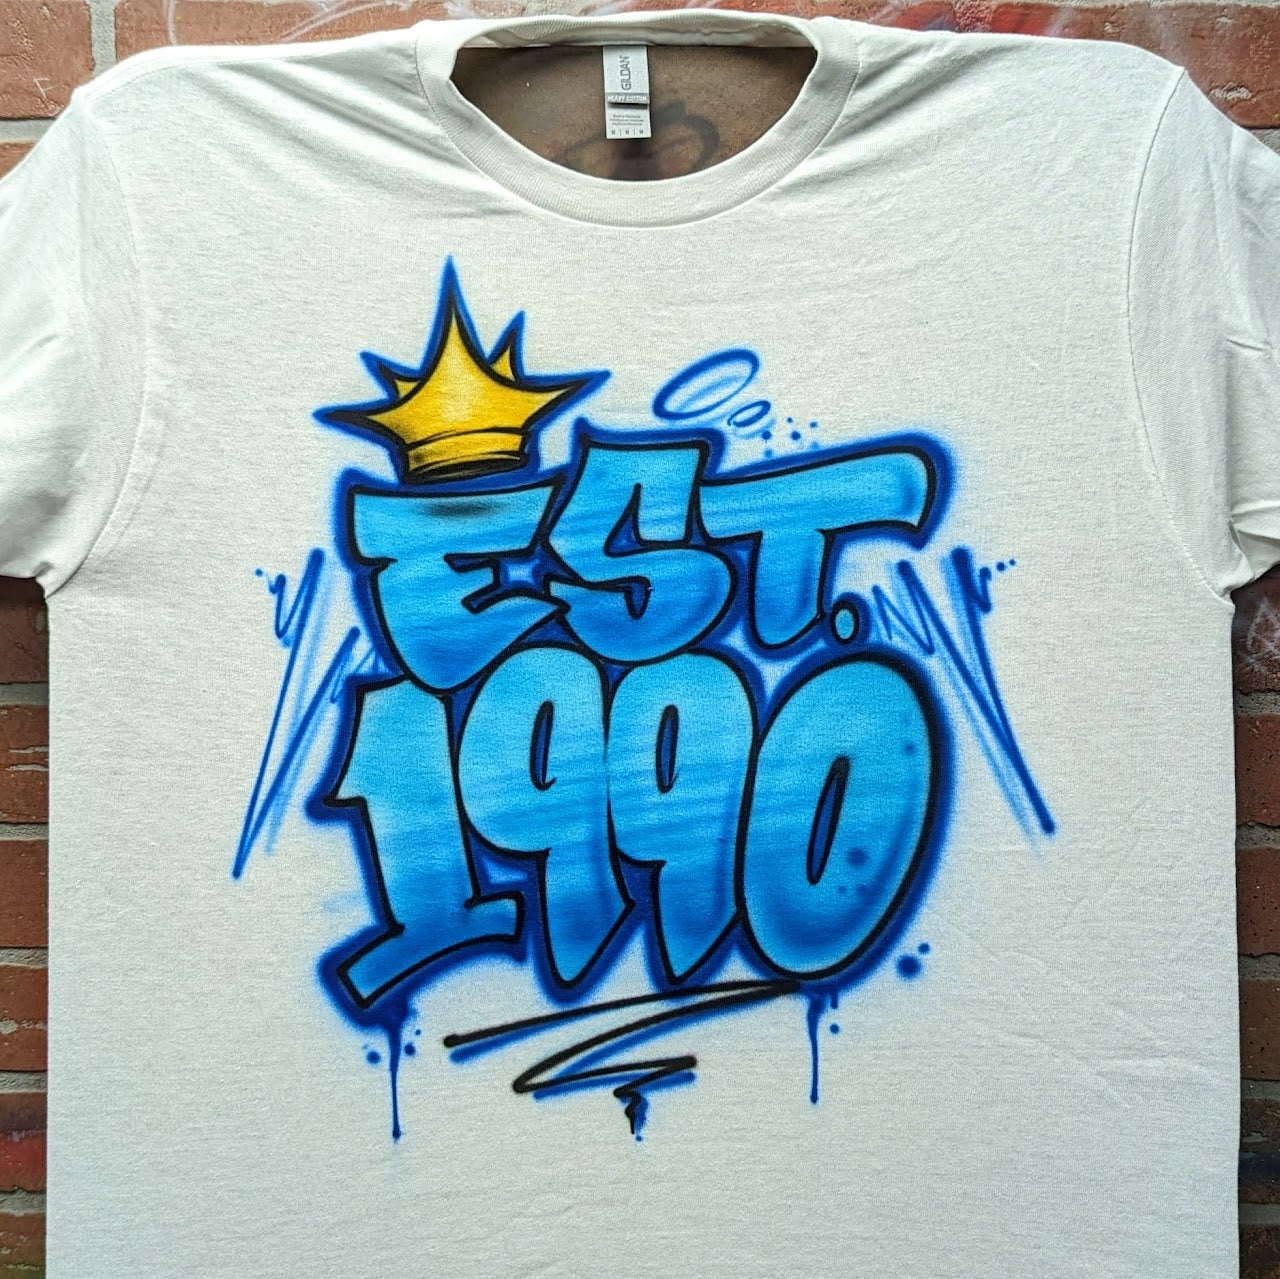 Custom Fashion Hip Hop Crop Top Baby Tee T-Shirt Digital Print